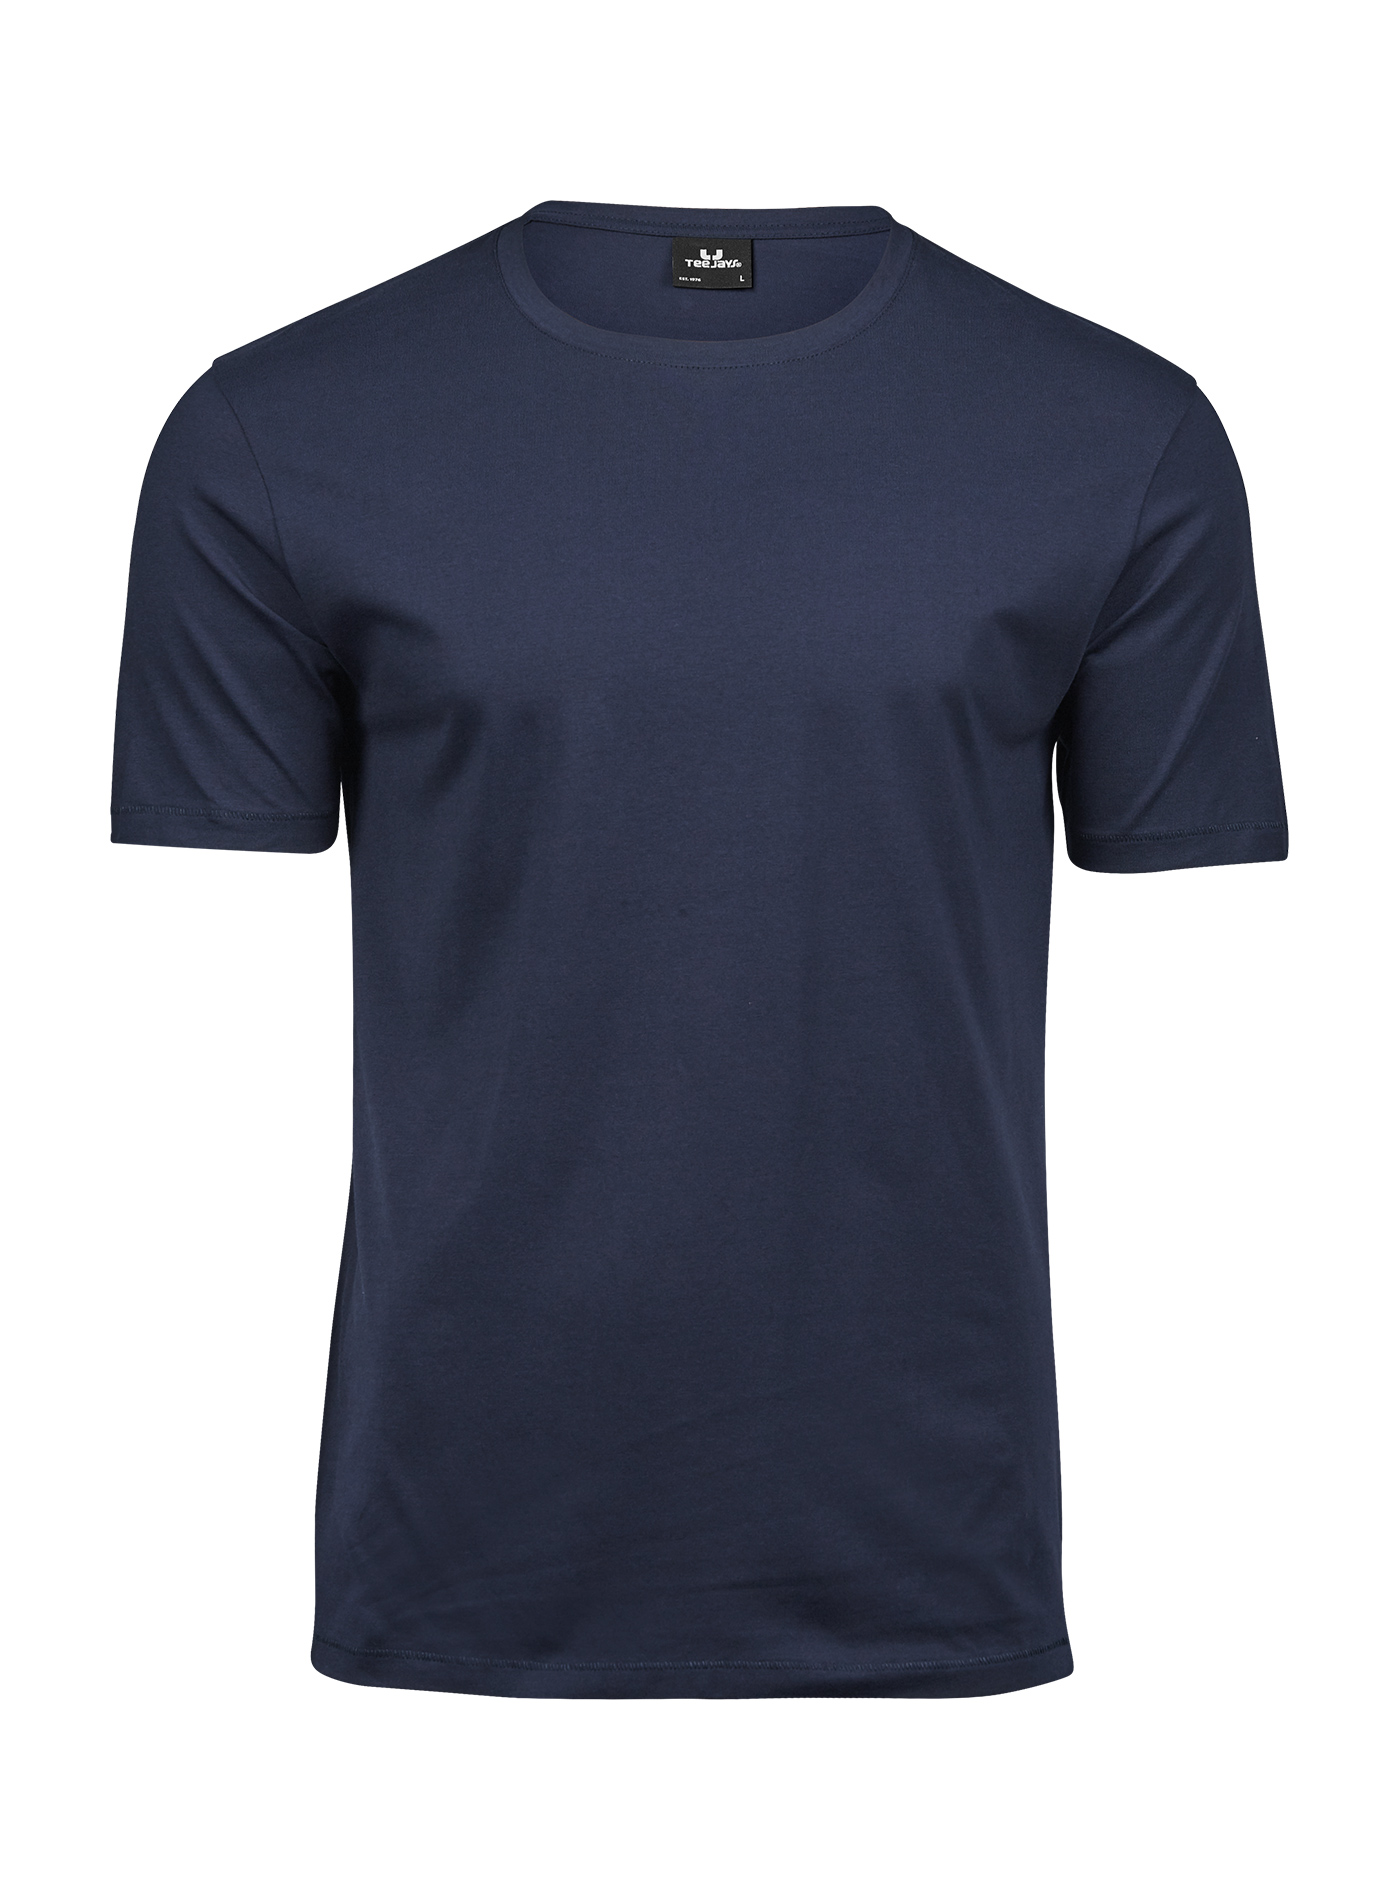 Pánské tričko Luxury Tee Jays - Cobalt blue/Navy S